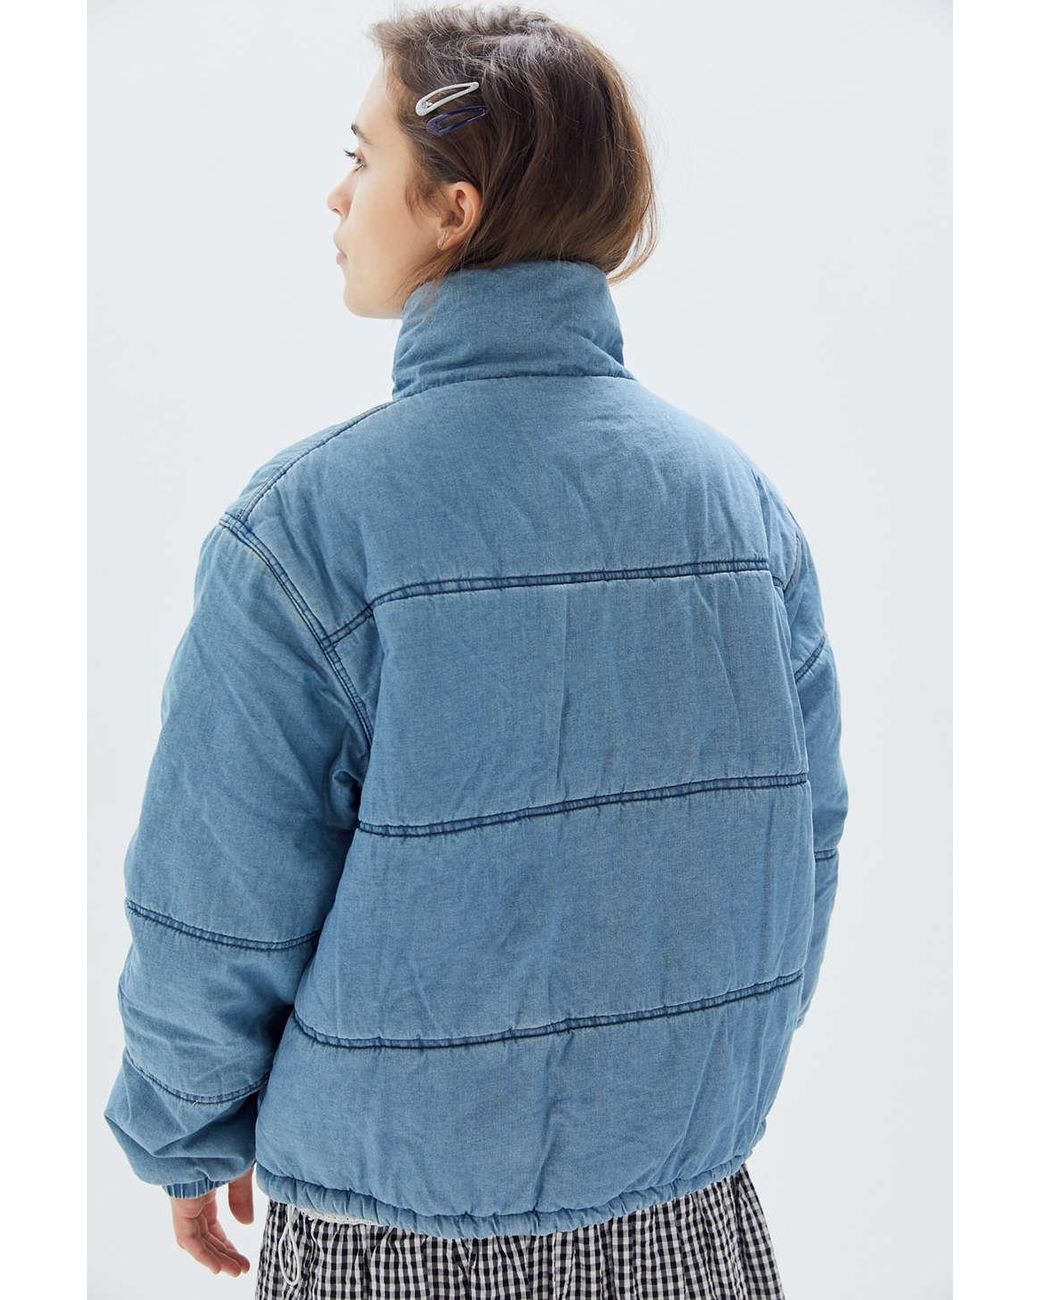 Urban Outfitters Uo Jordan Denim Puffer Jacket in Blue | Lyst